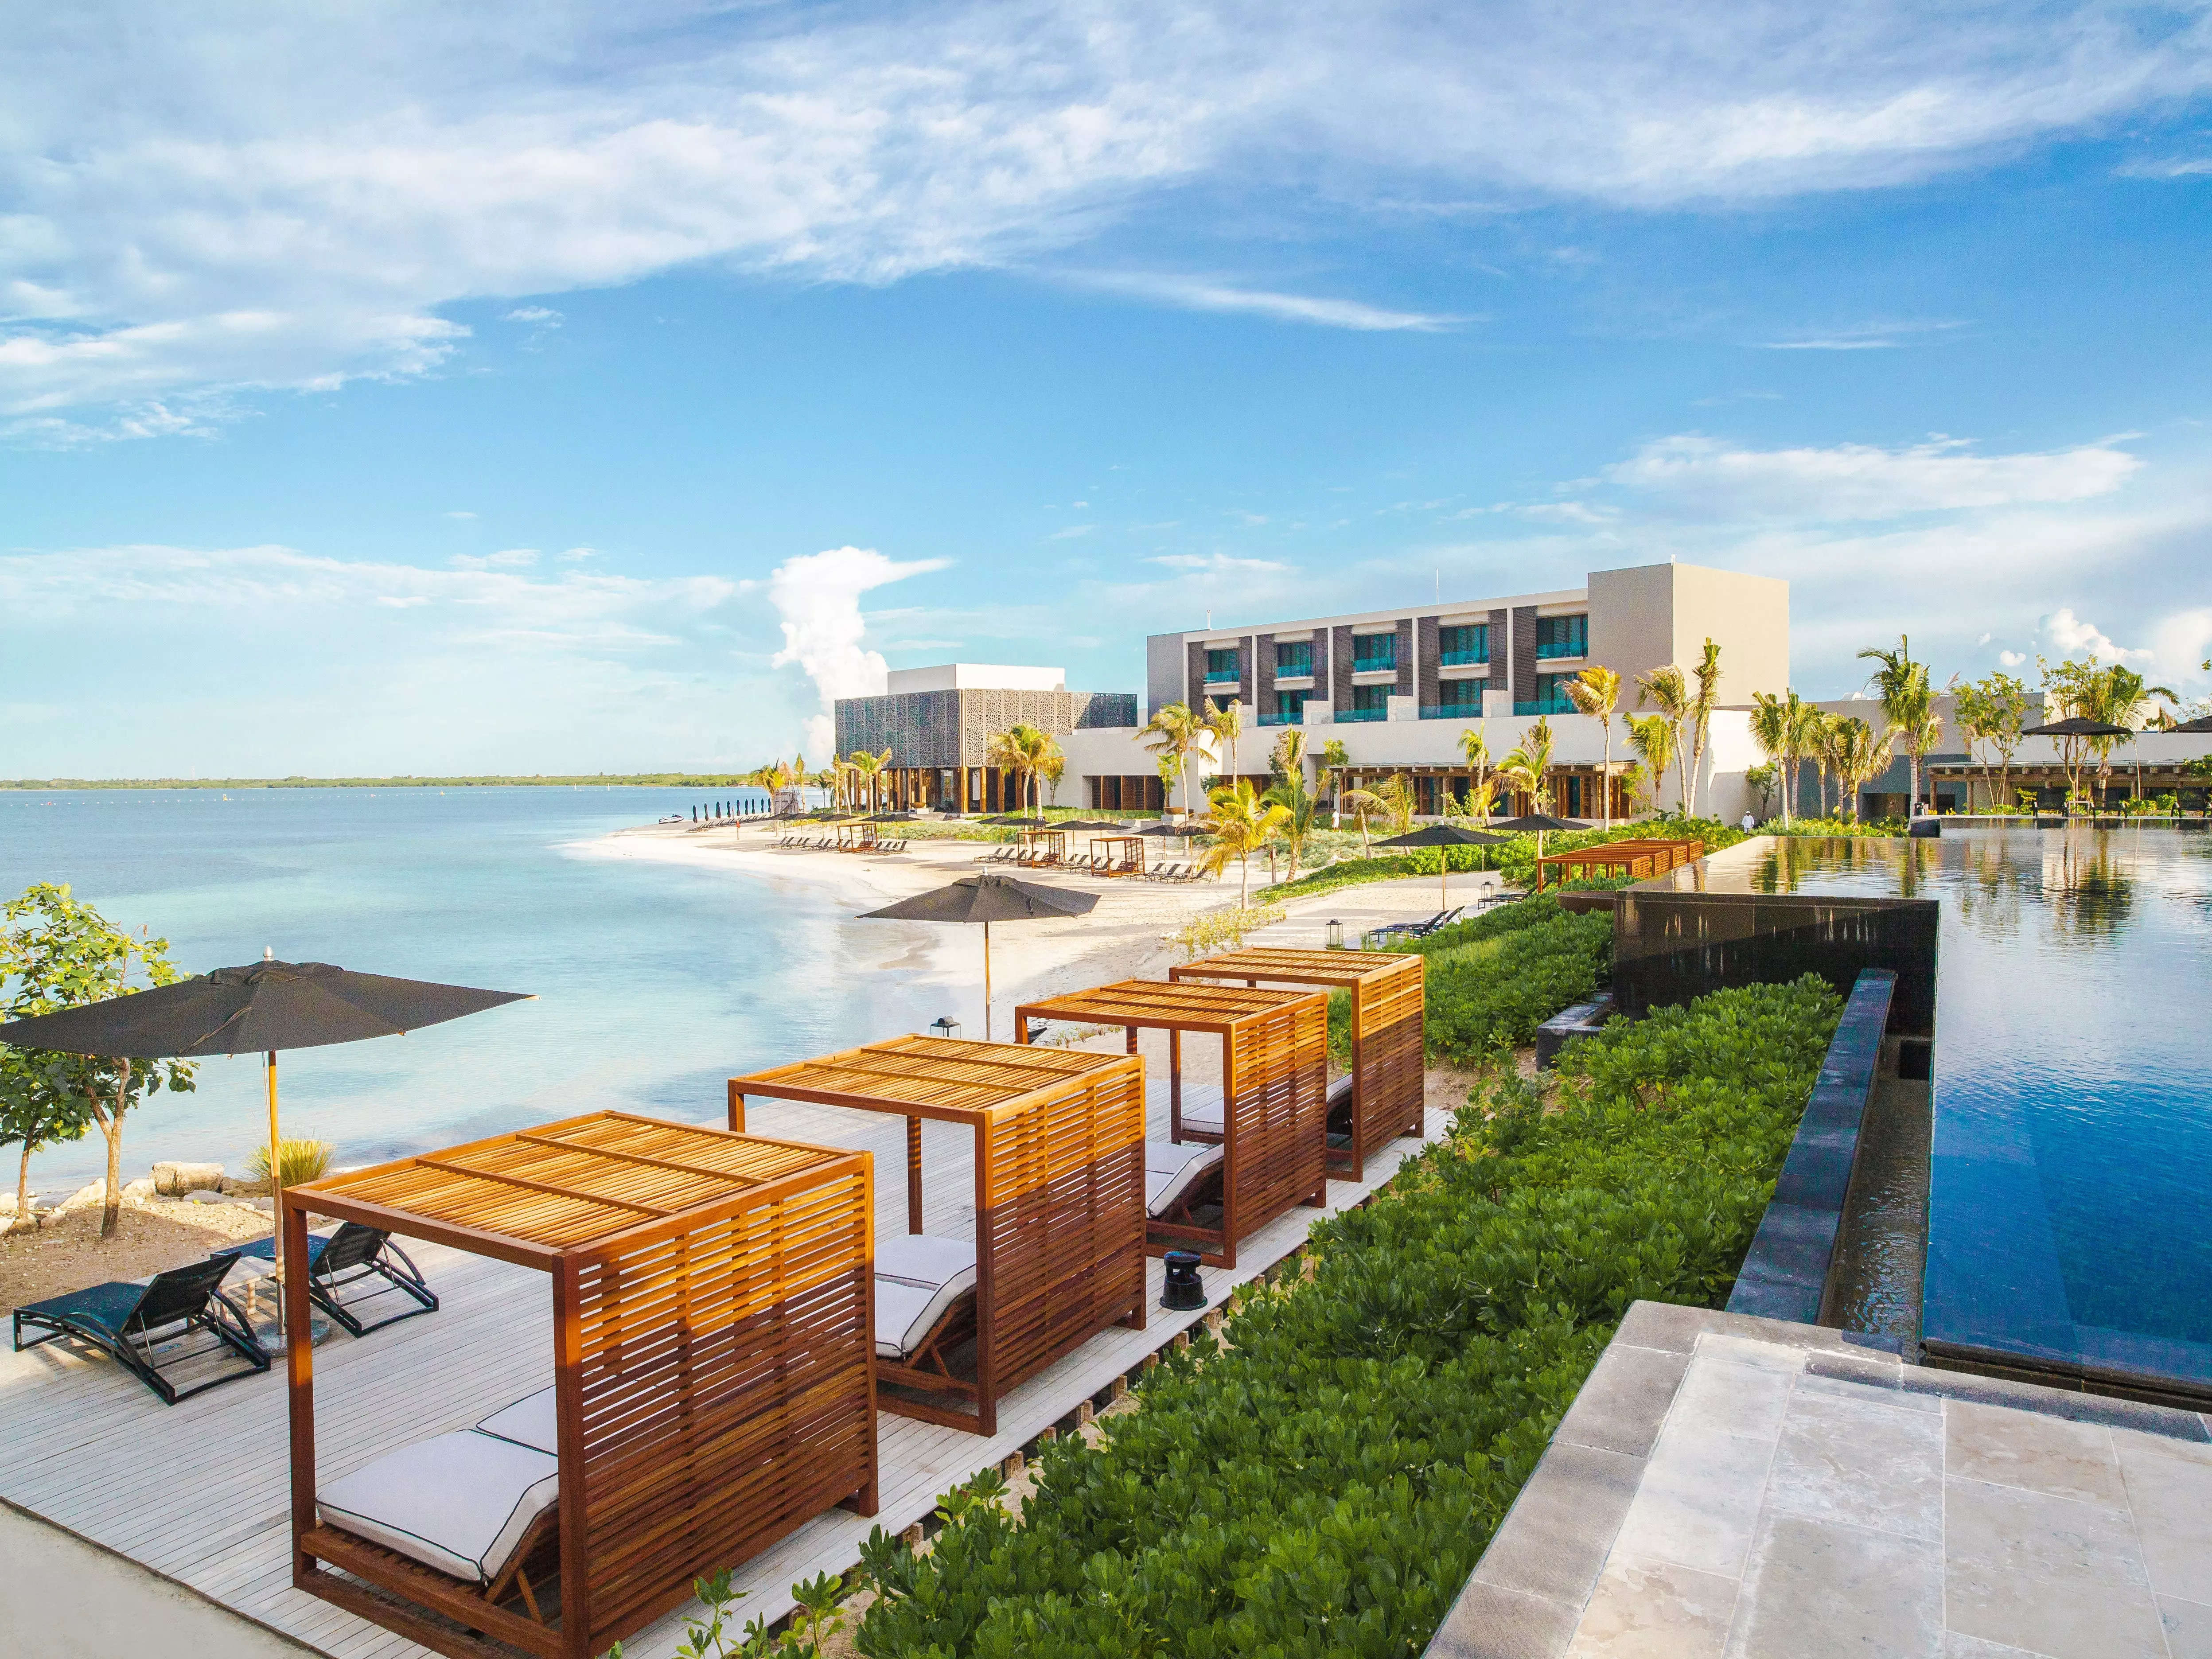 A beach hotel with cabanas facing the ocean.